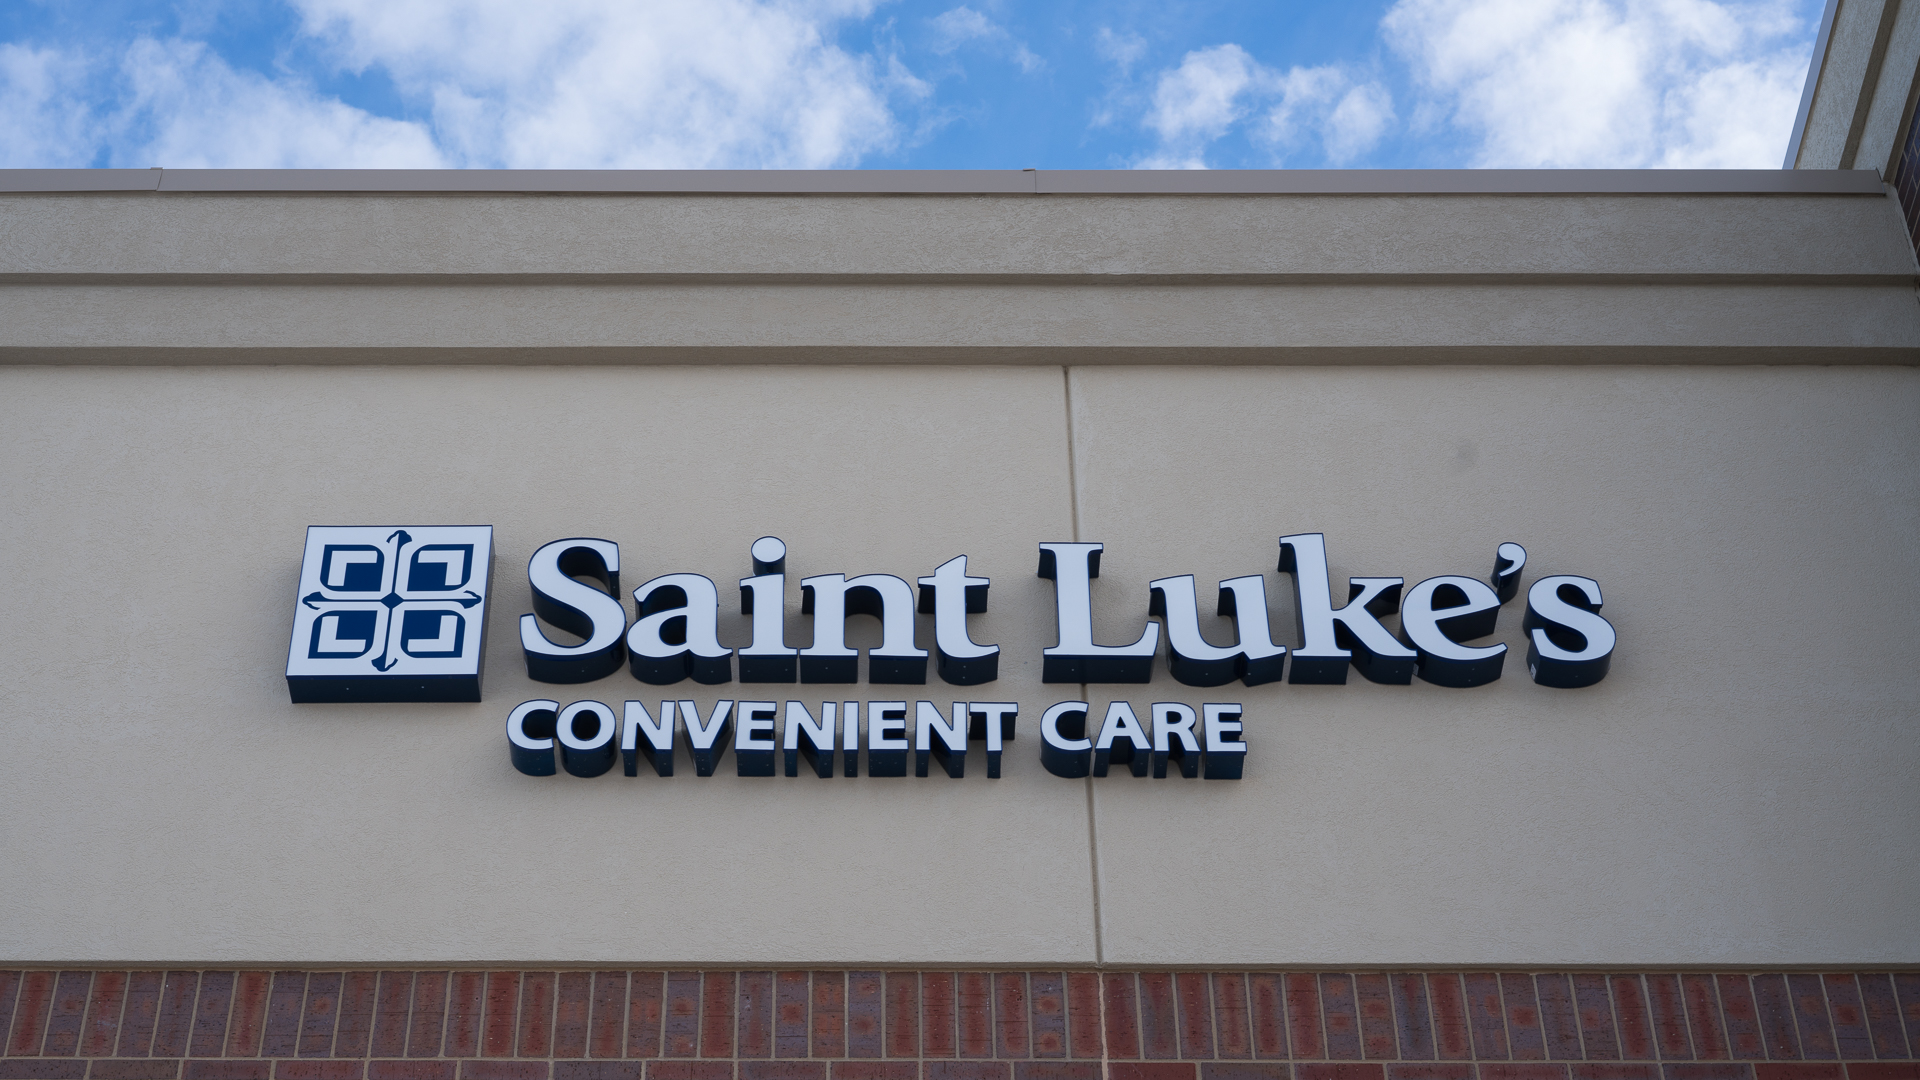 St. Luke's Convenient Care in Overland Park, KS - Luminous Neon Art